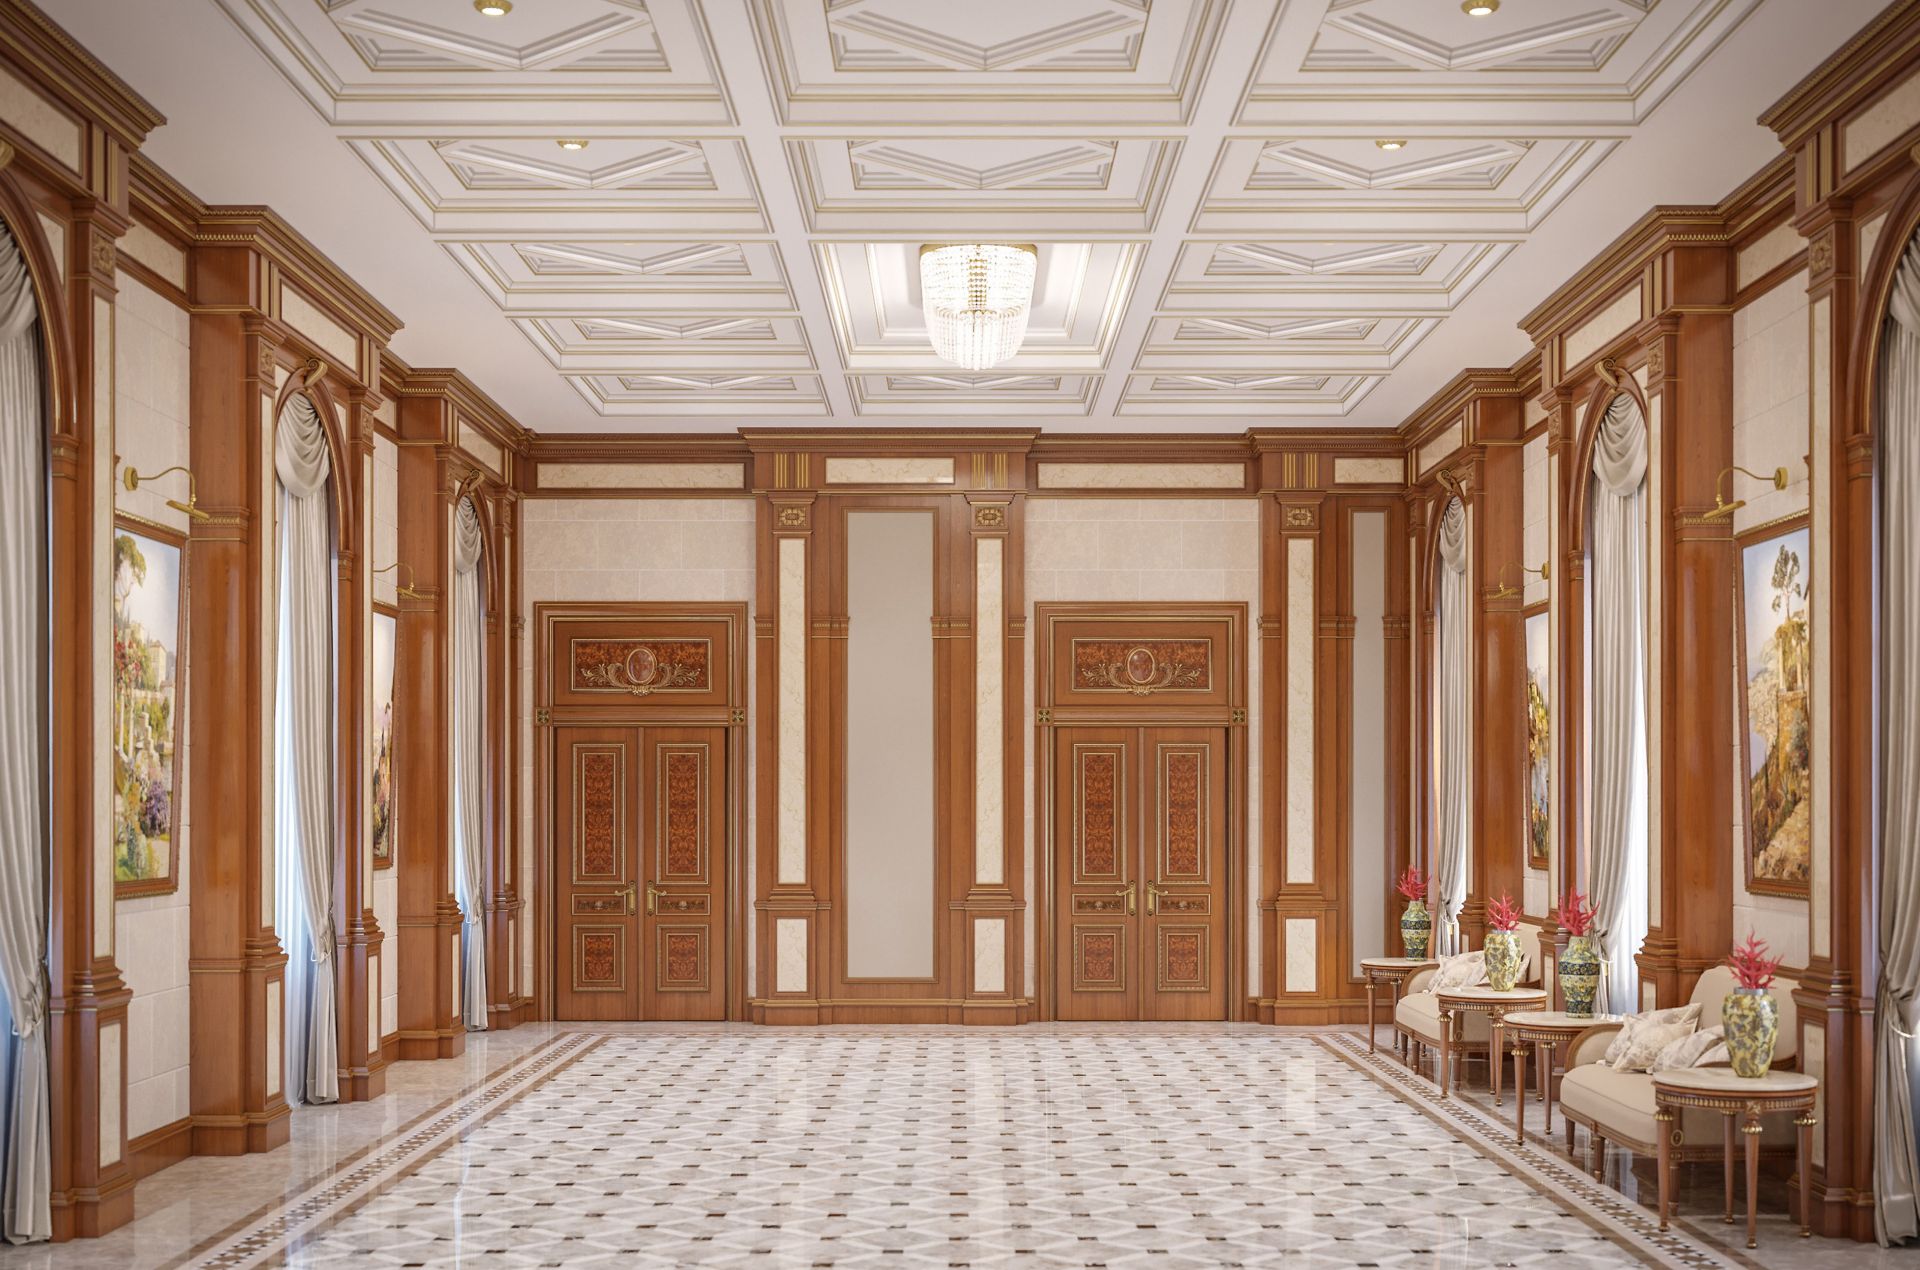 Classic lobby interior